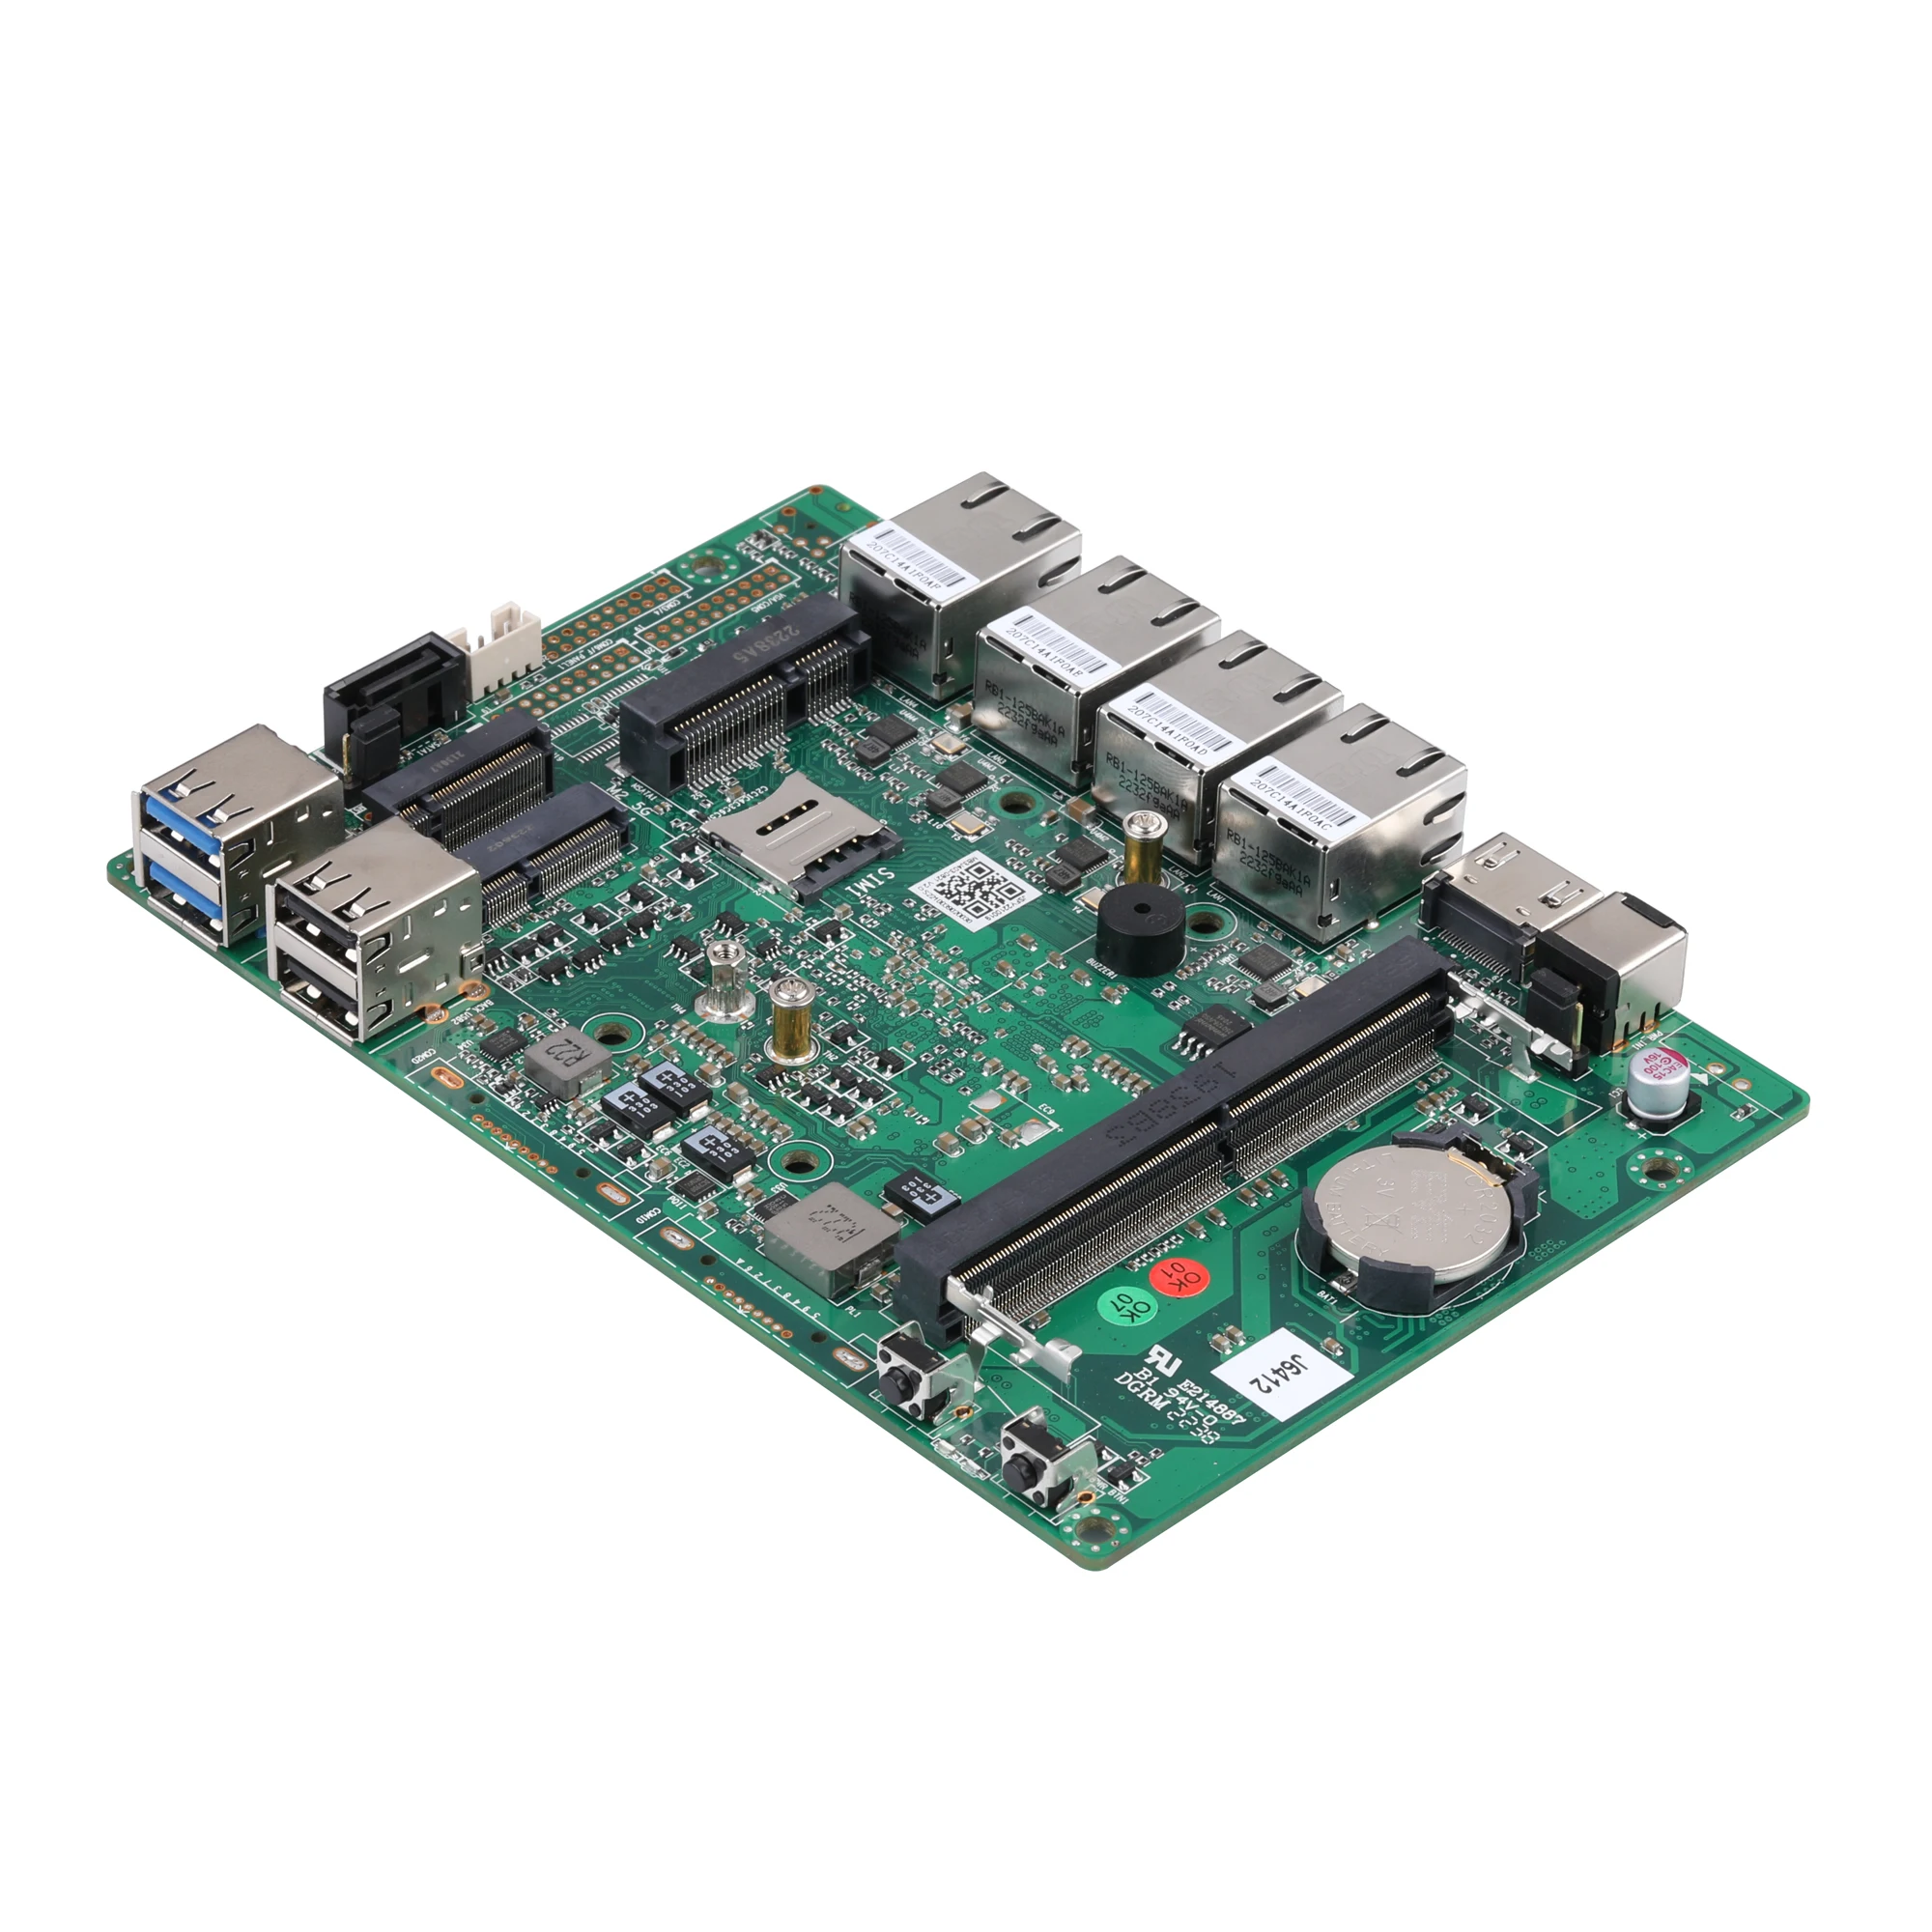 Qotom-Mini ITX Motherboard, 4 LAN, baixa potência, 7*24 horas, MB3J403-0821, 148mm x 104mm